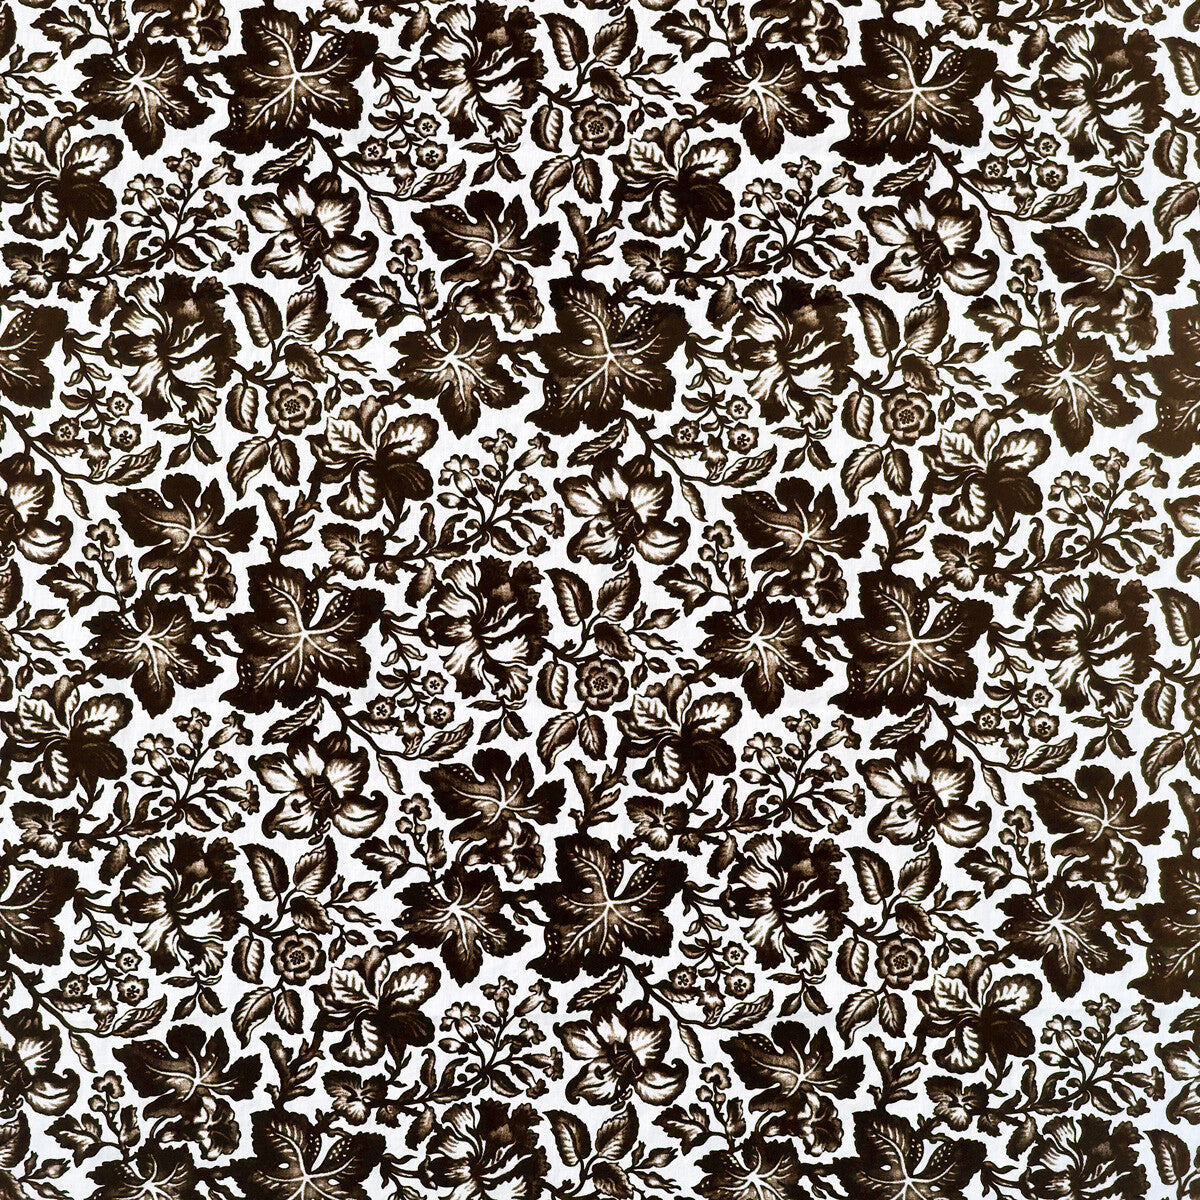 Susana fabric in chocolate color - pattern LCT1044.003.0 - by Gaston y Daniela in the Lorenzo Castillo VI collection